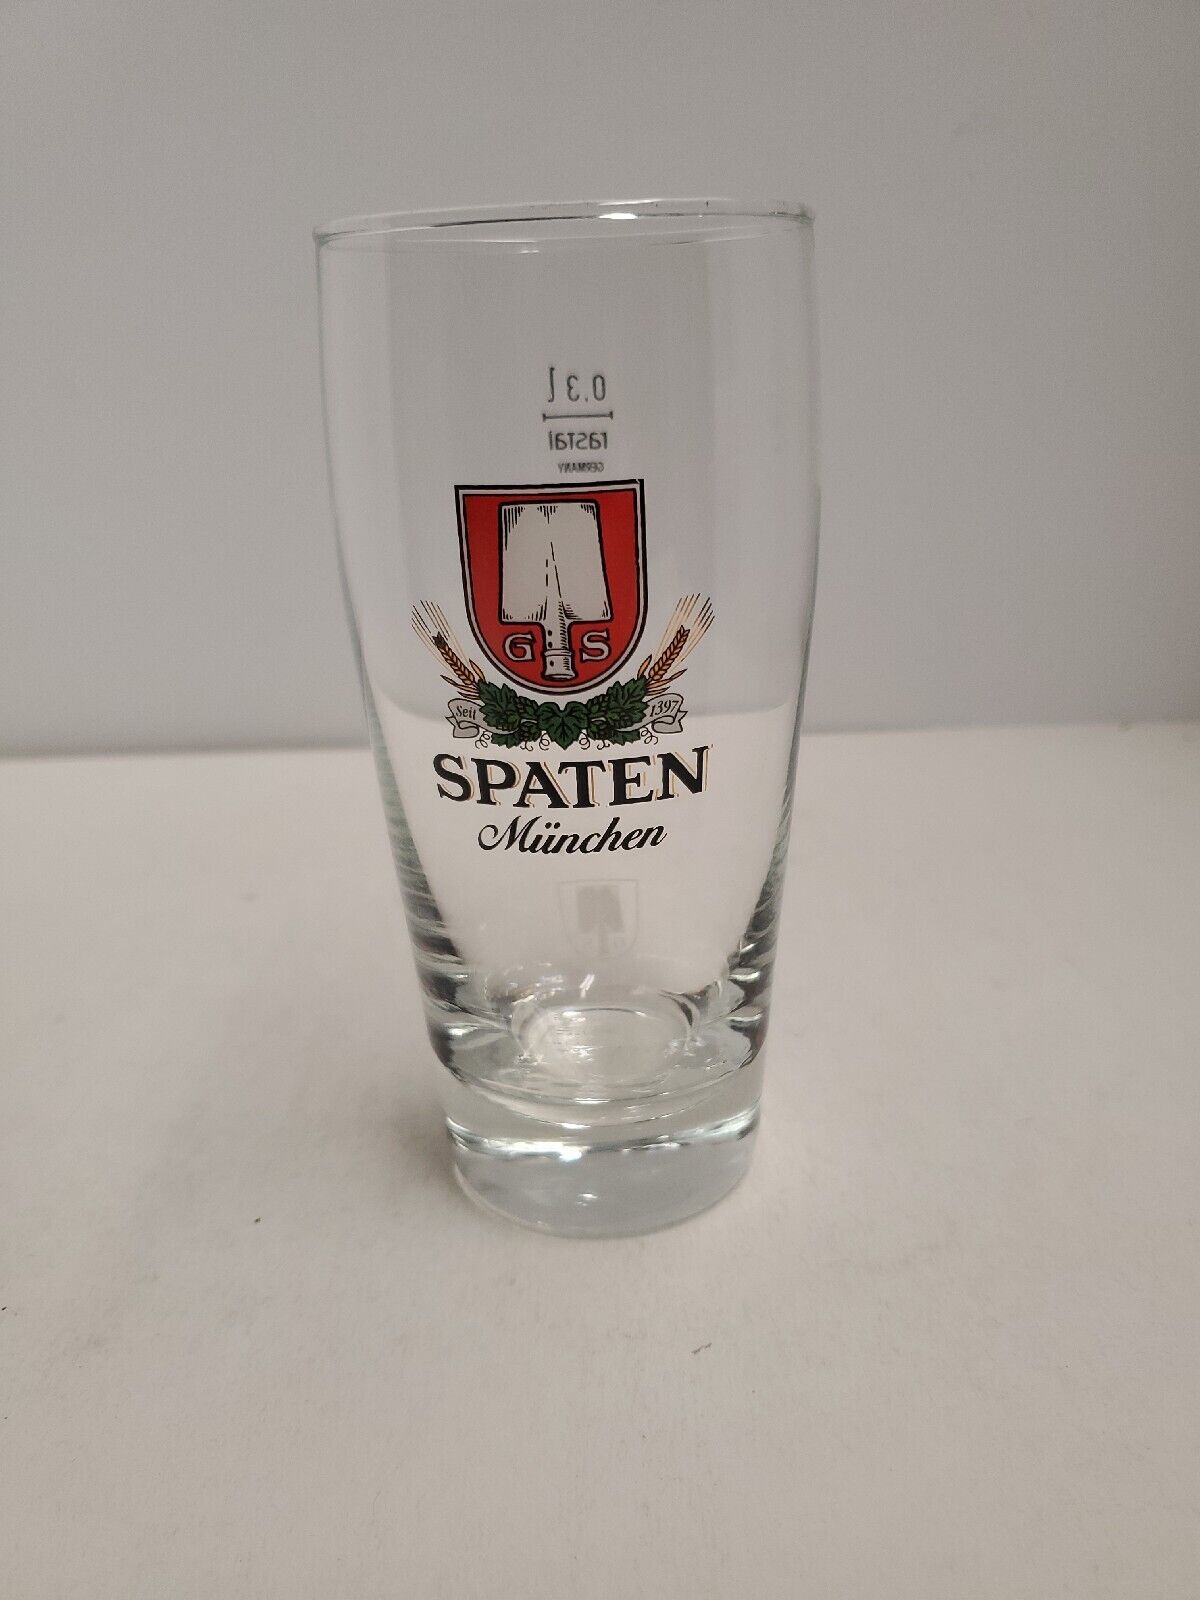 Spaten Munchen 0.3l Rastal Beer Glass